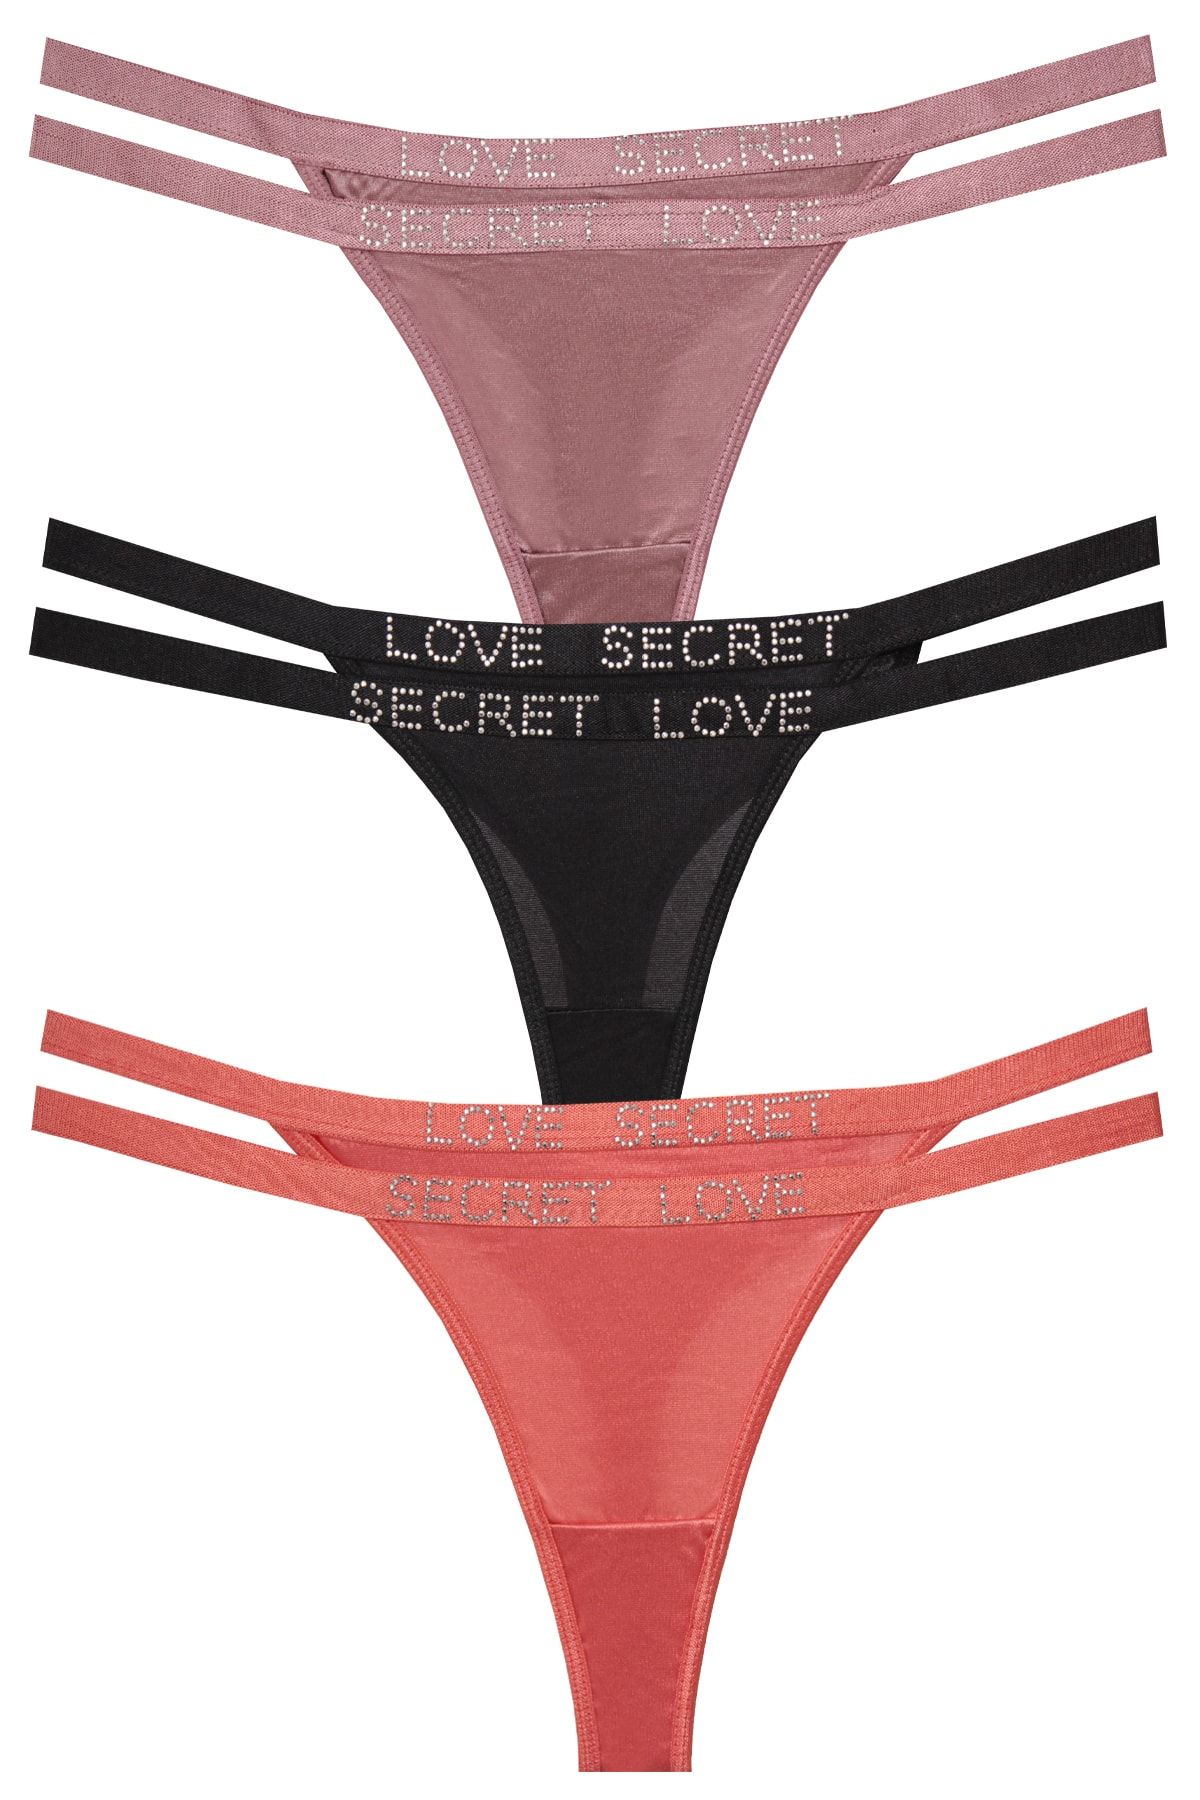 papatya lingerie 3''lü Love Secret Yazılı Beli Çift Lastikli String